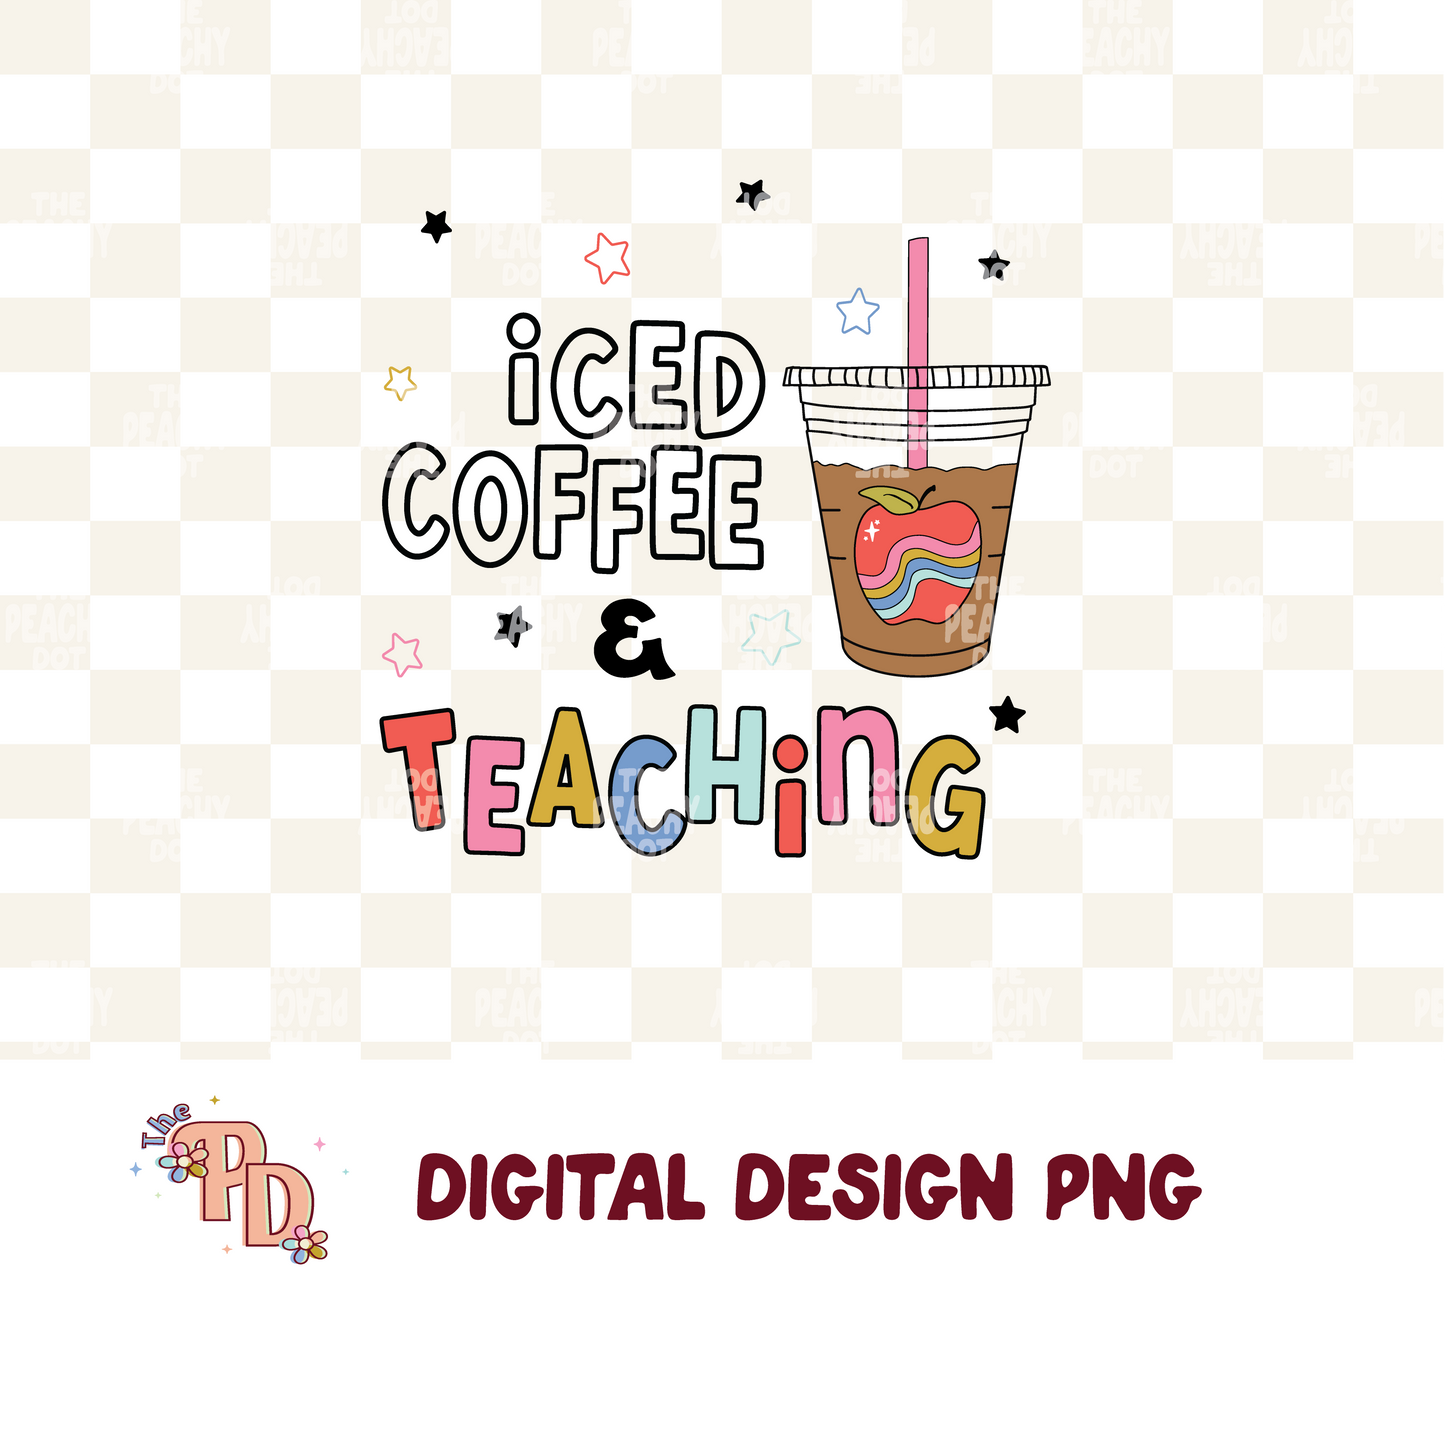 Iced Coffee & Teaching Png